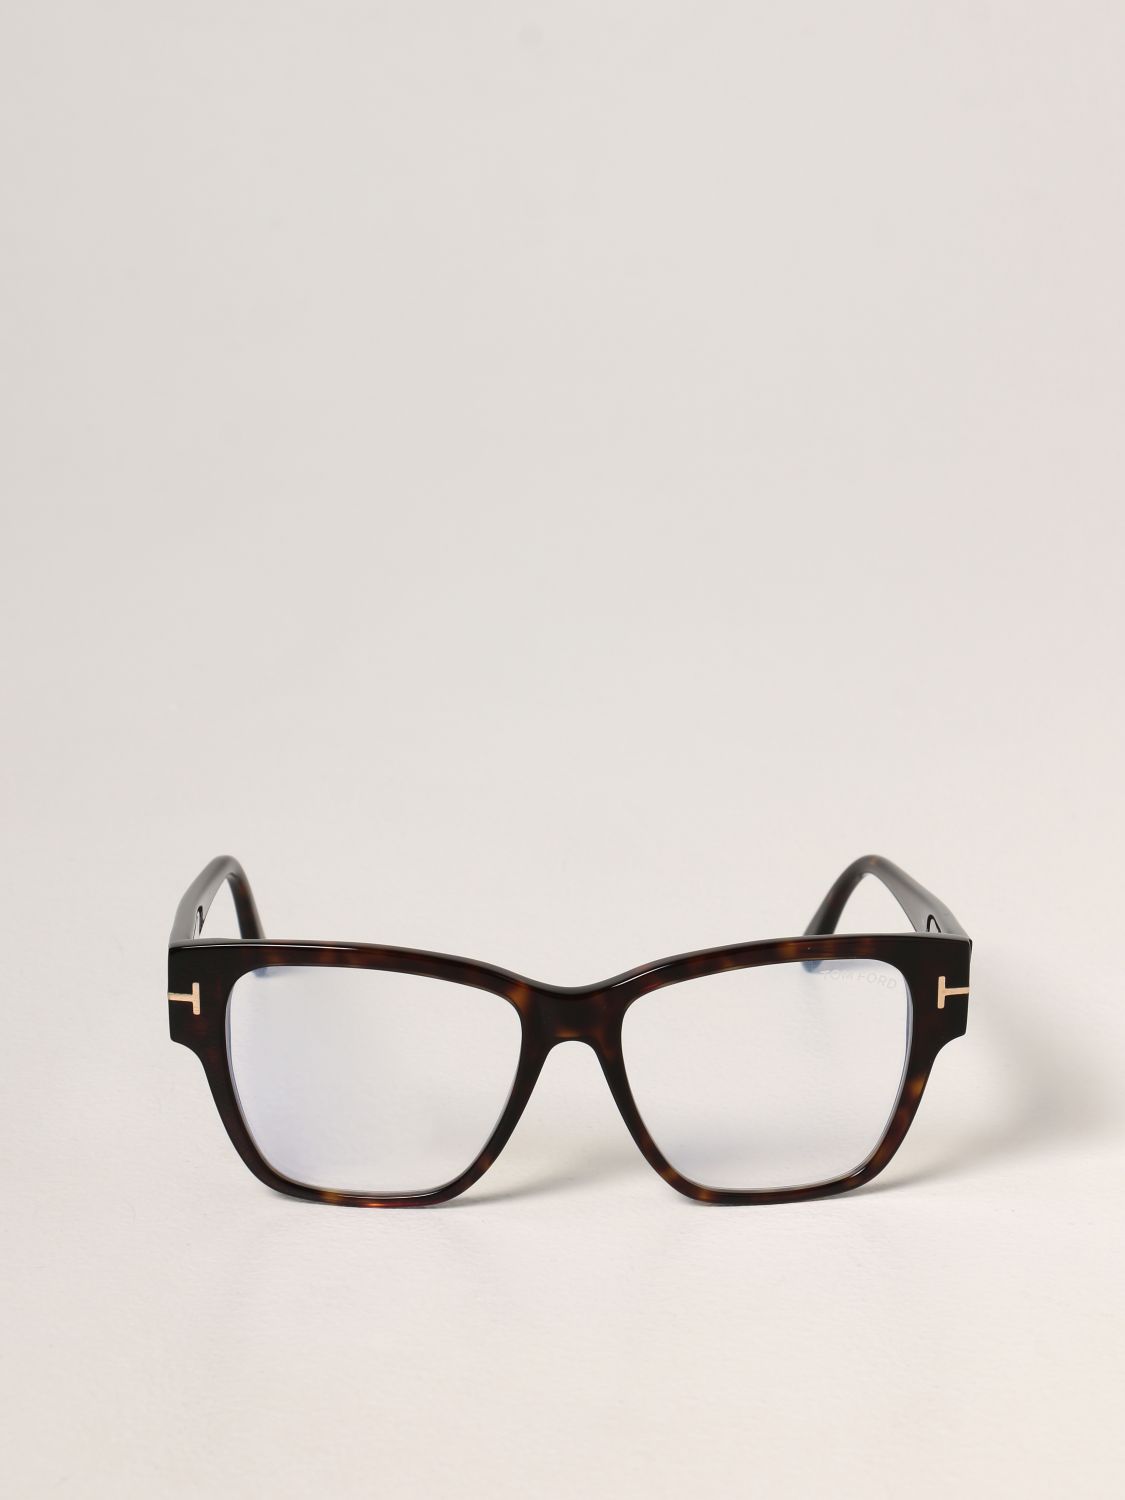 Gafas Tom Ford: Gafas mujer Tom Ford marrón 2